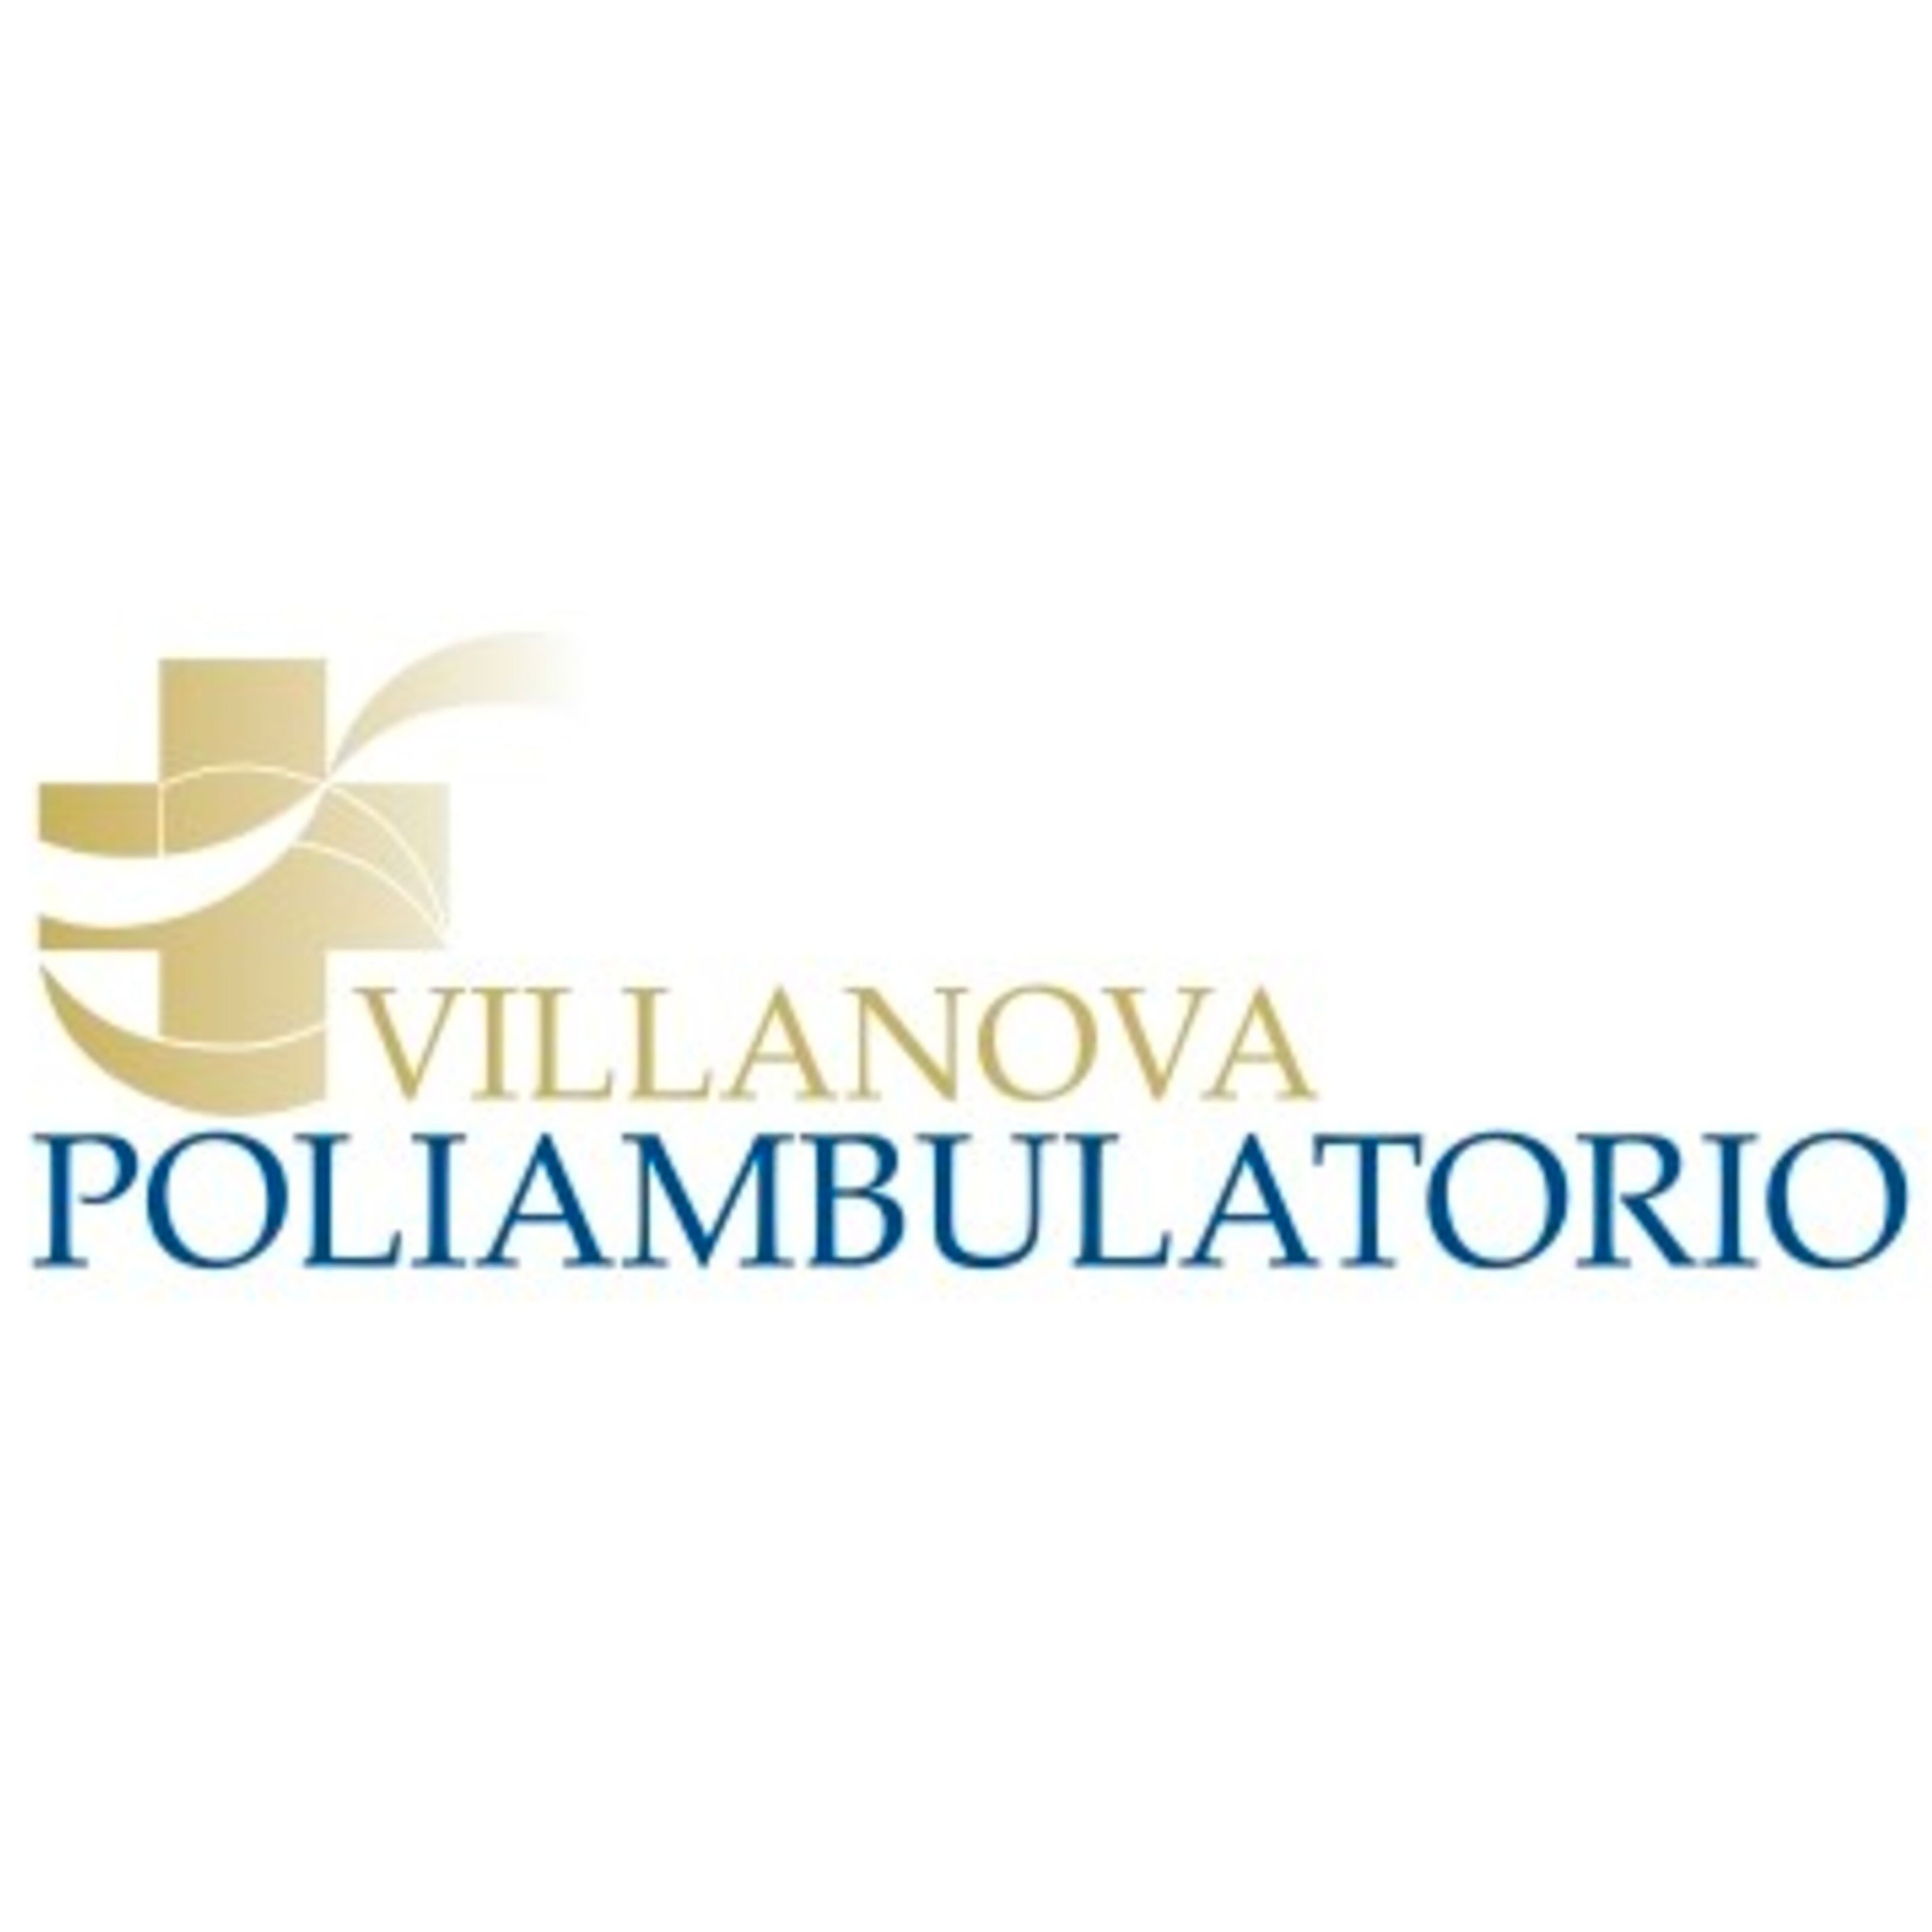 Poliambulatorio Villanova